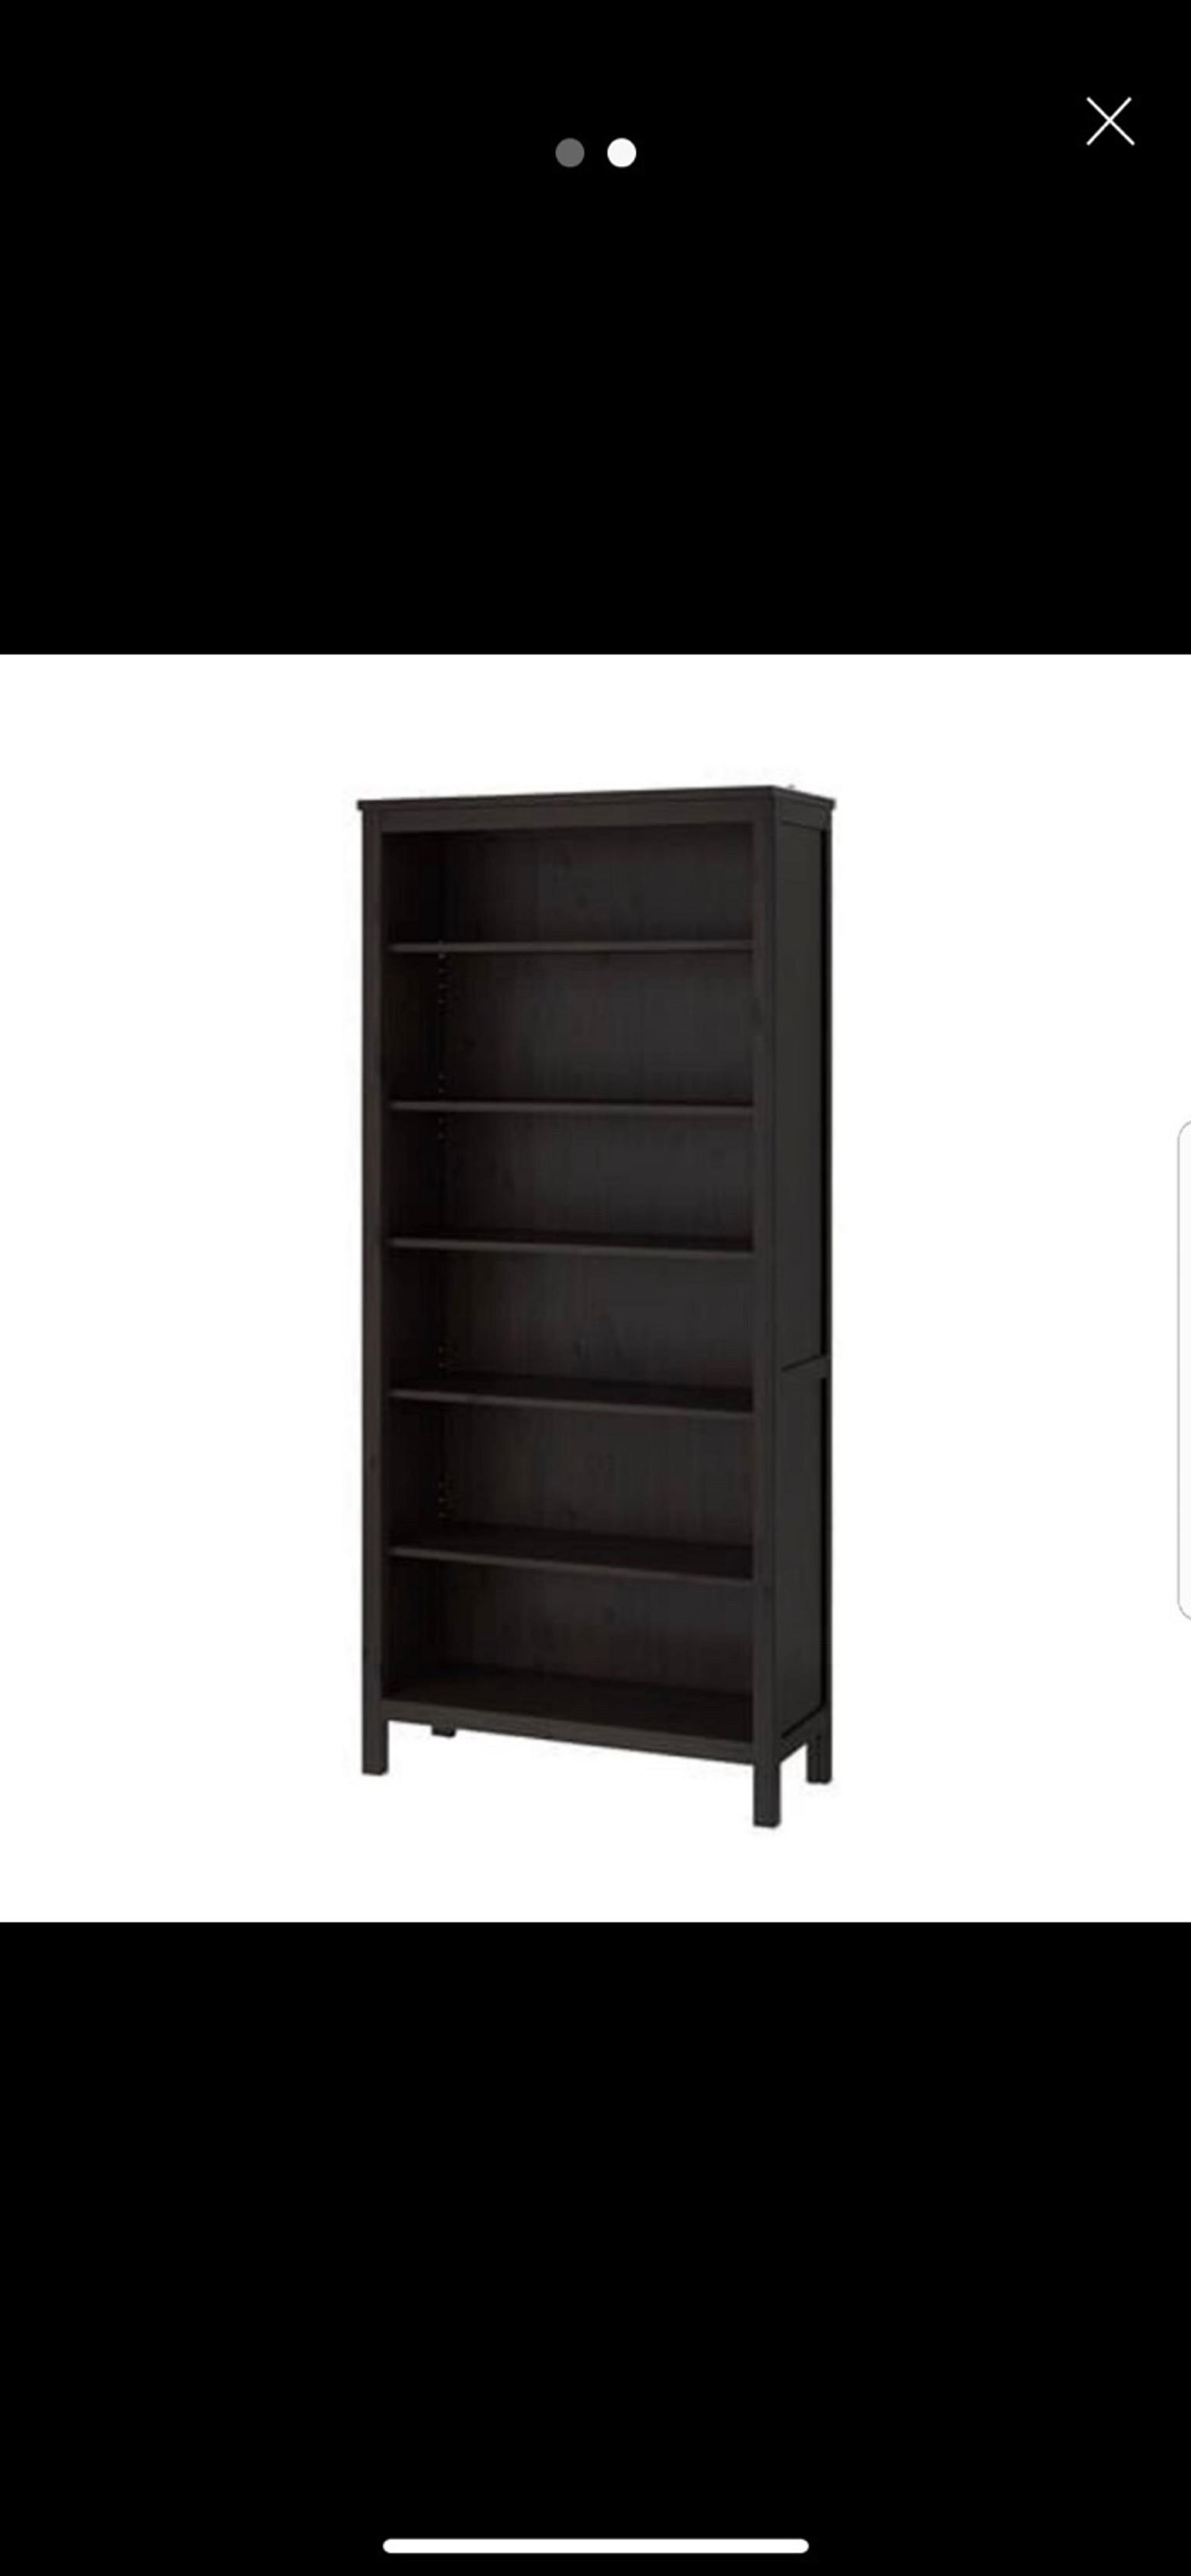 Hemnes Black Brown Ikea Bookshelf In Da8 Bexley Fur 30 00 Zum